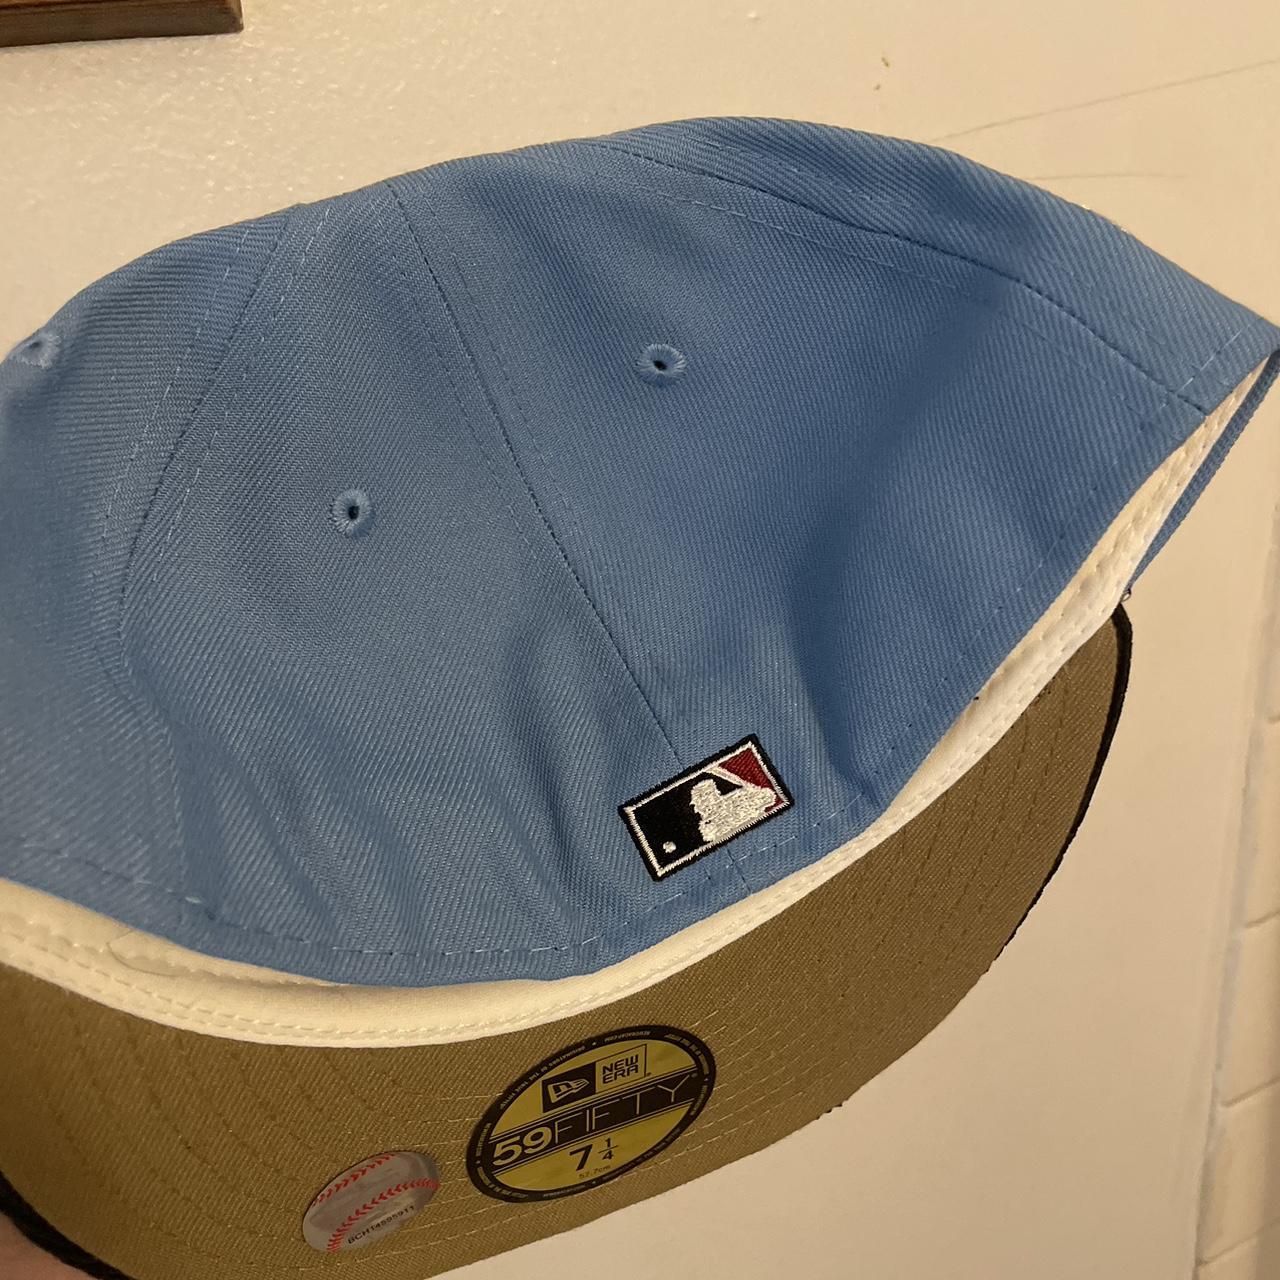 New Houston Astros Vintage Corduroy New Era Hat - Depop